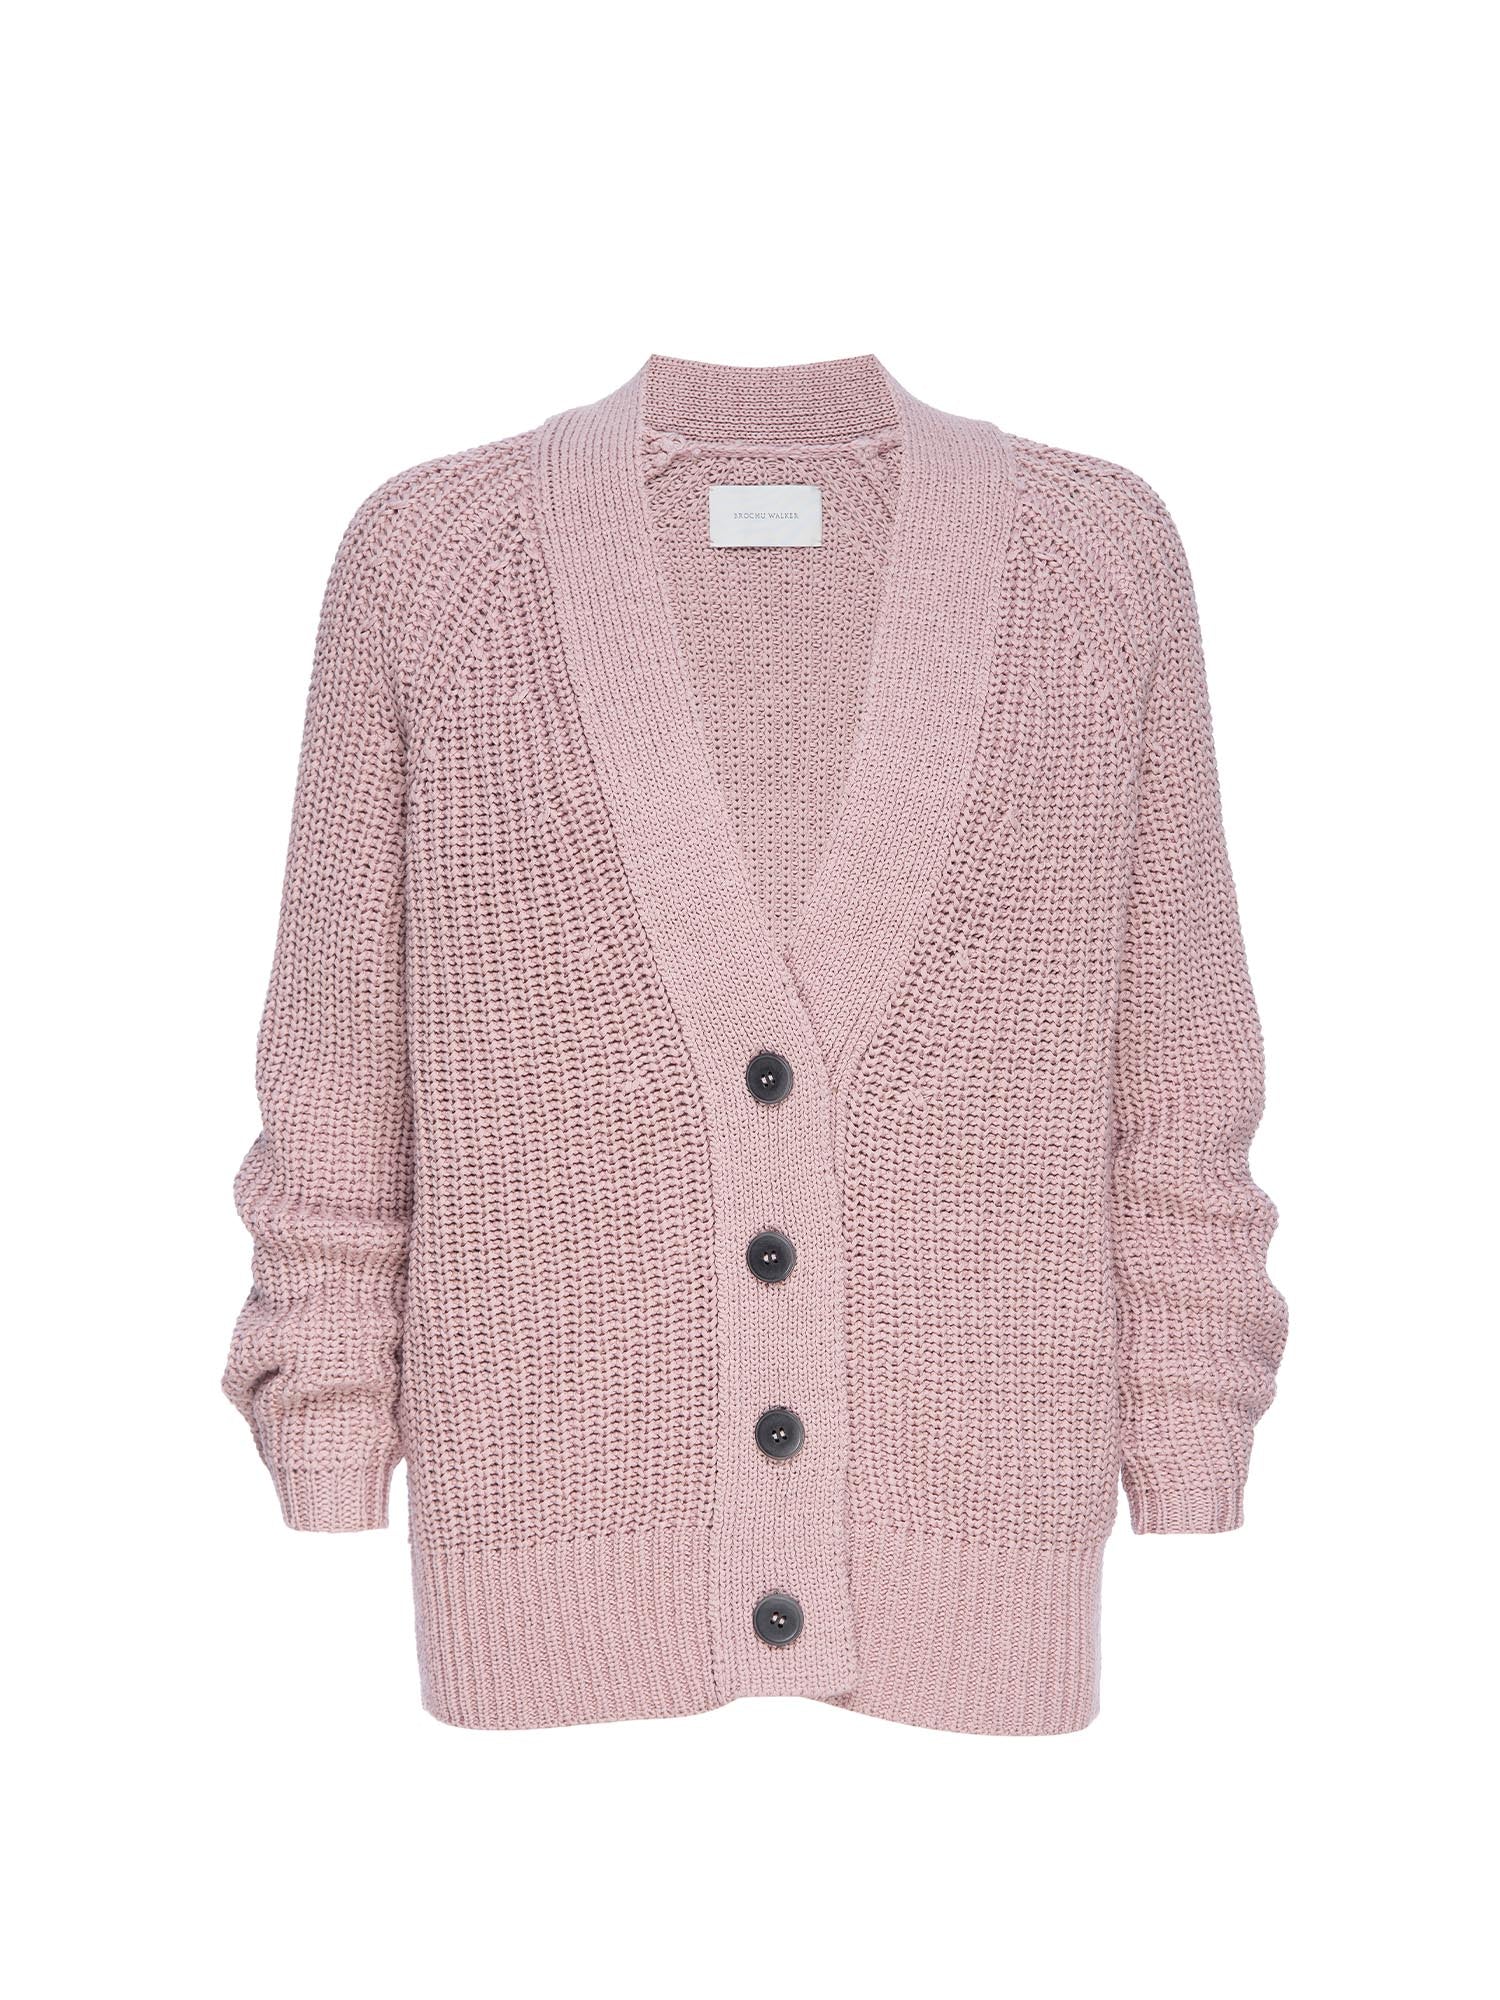 Jen linen cotton pink cardigan sweater flat view